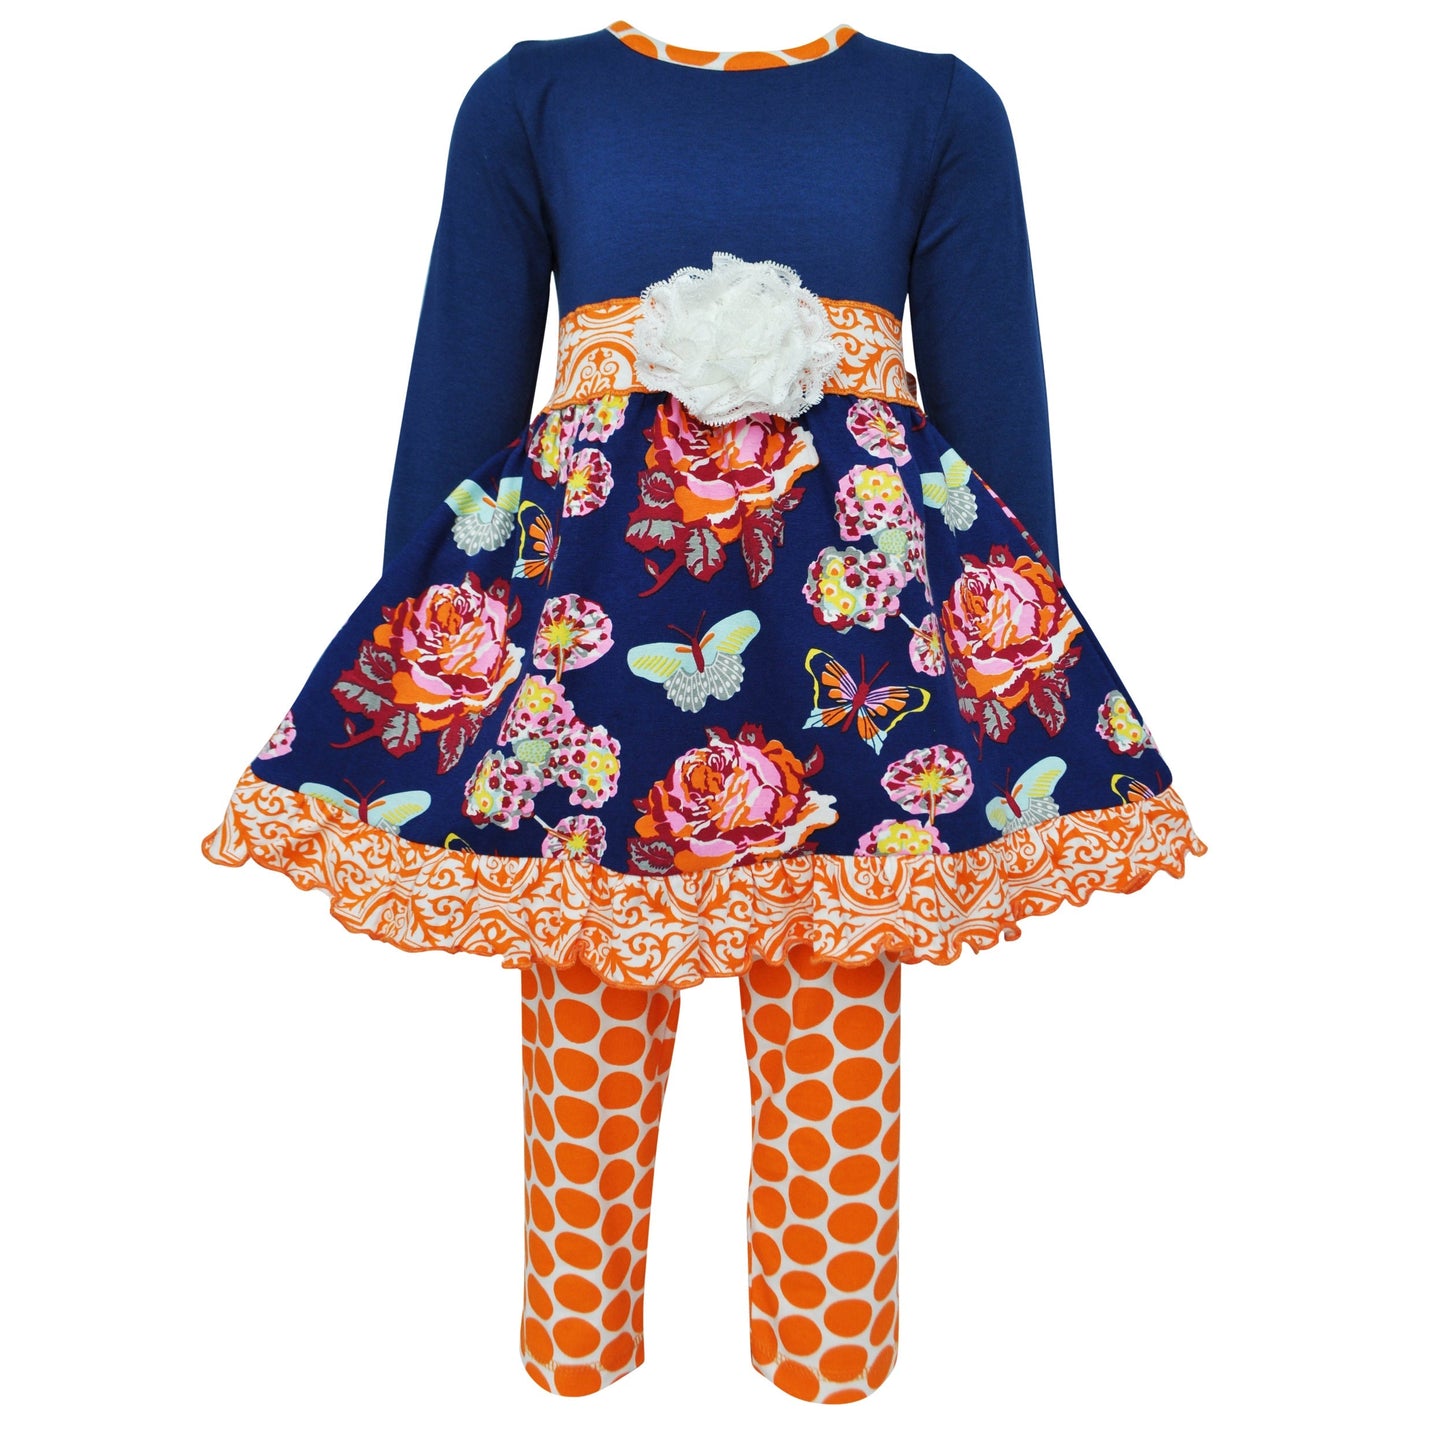 AnnLoren Girls Boutique Blue Butterfly Floral Dress Orange Polka Dot Legging Set sz 2/3T-9/10